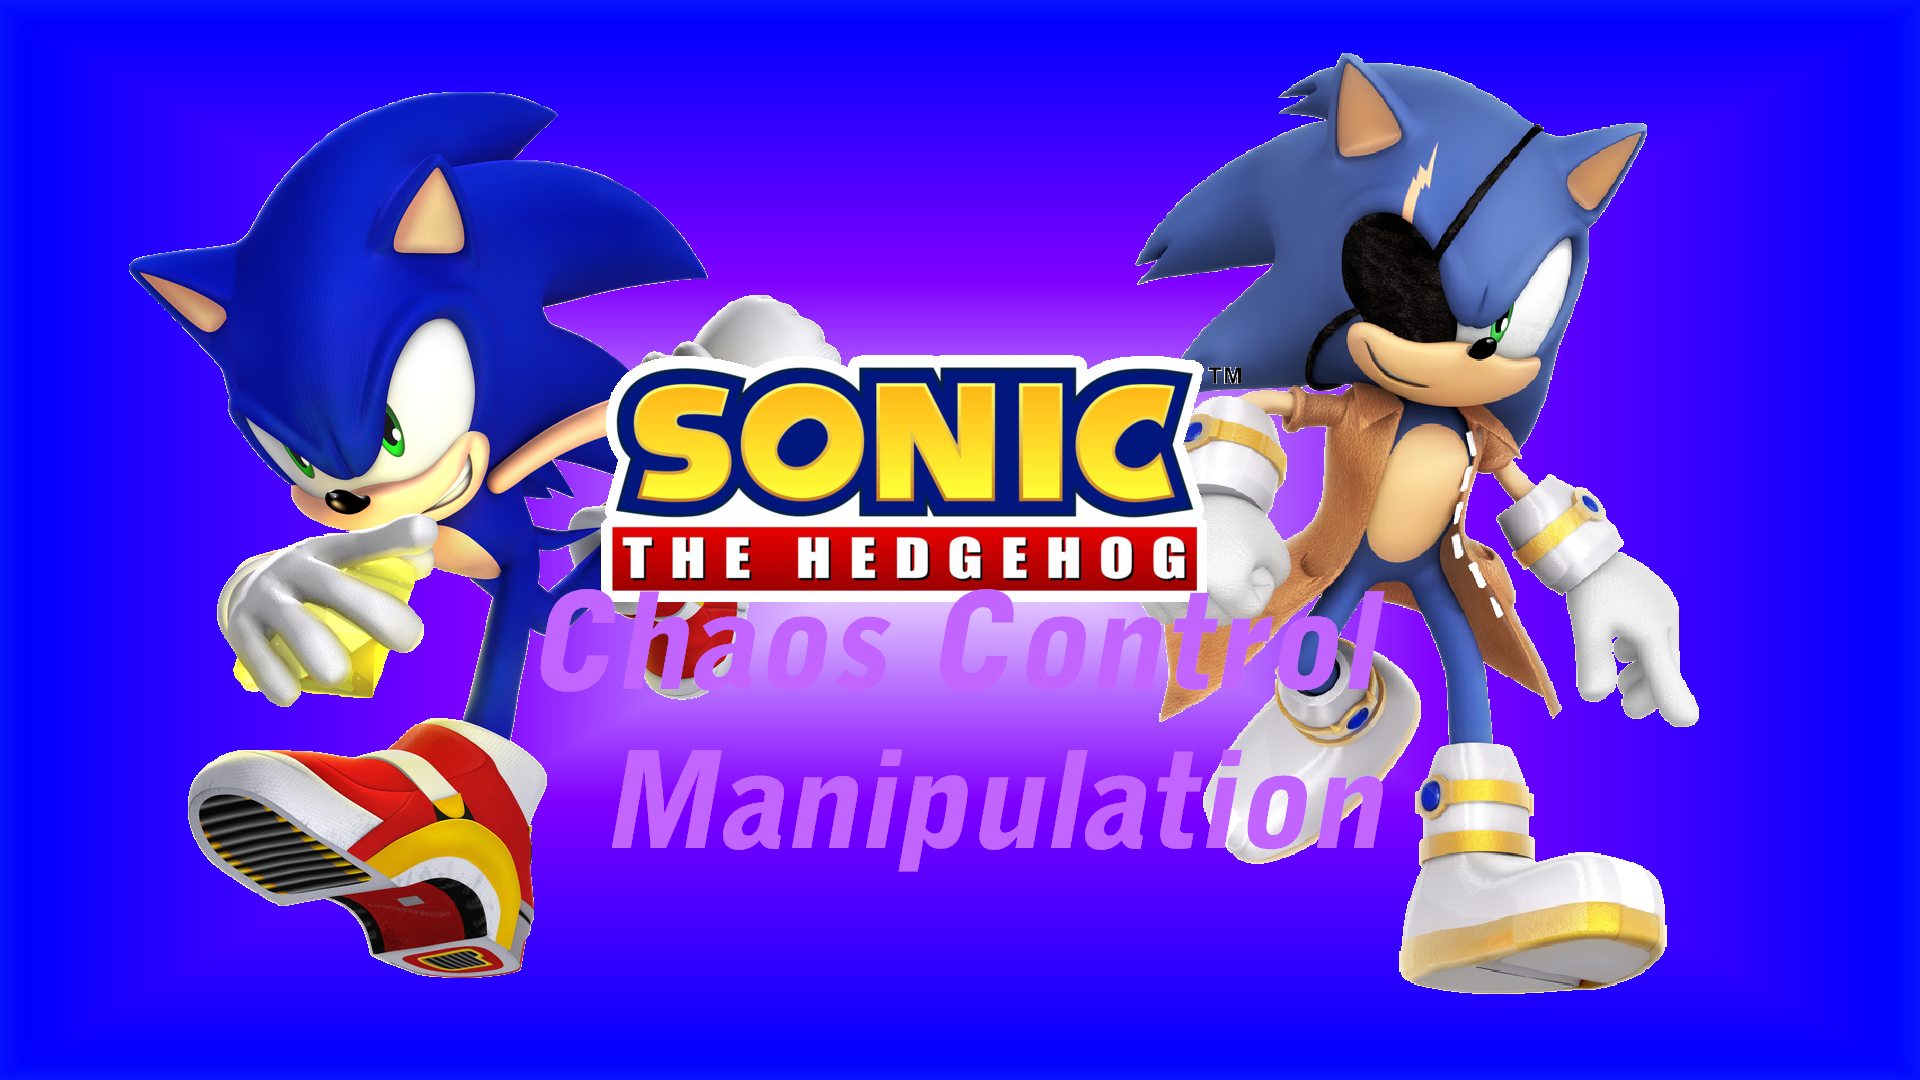 Shadow the Hedgehog (film), Sonic Fanon Wiki